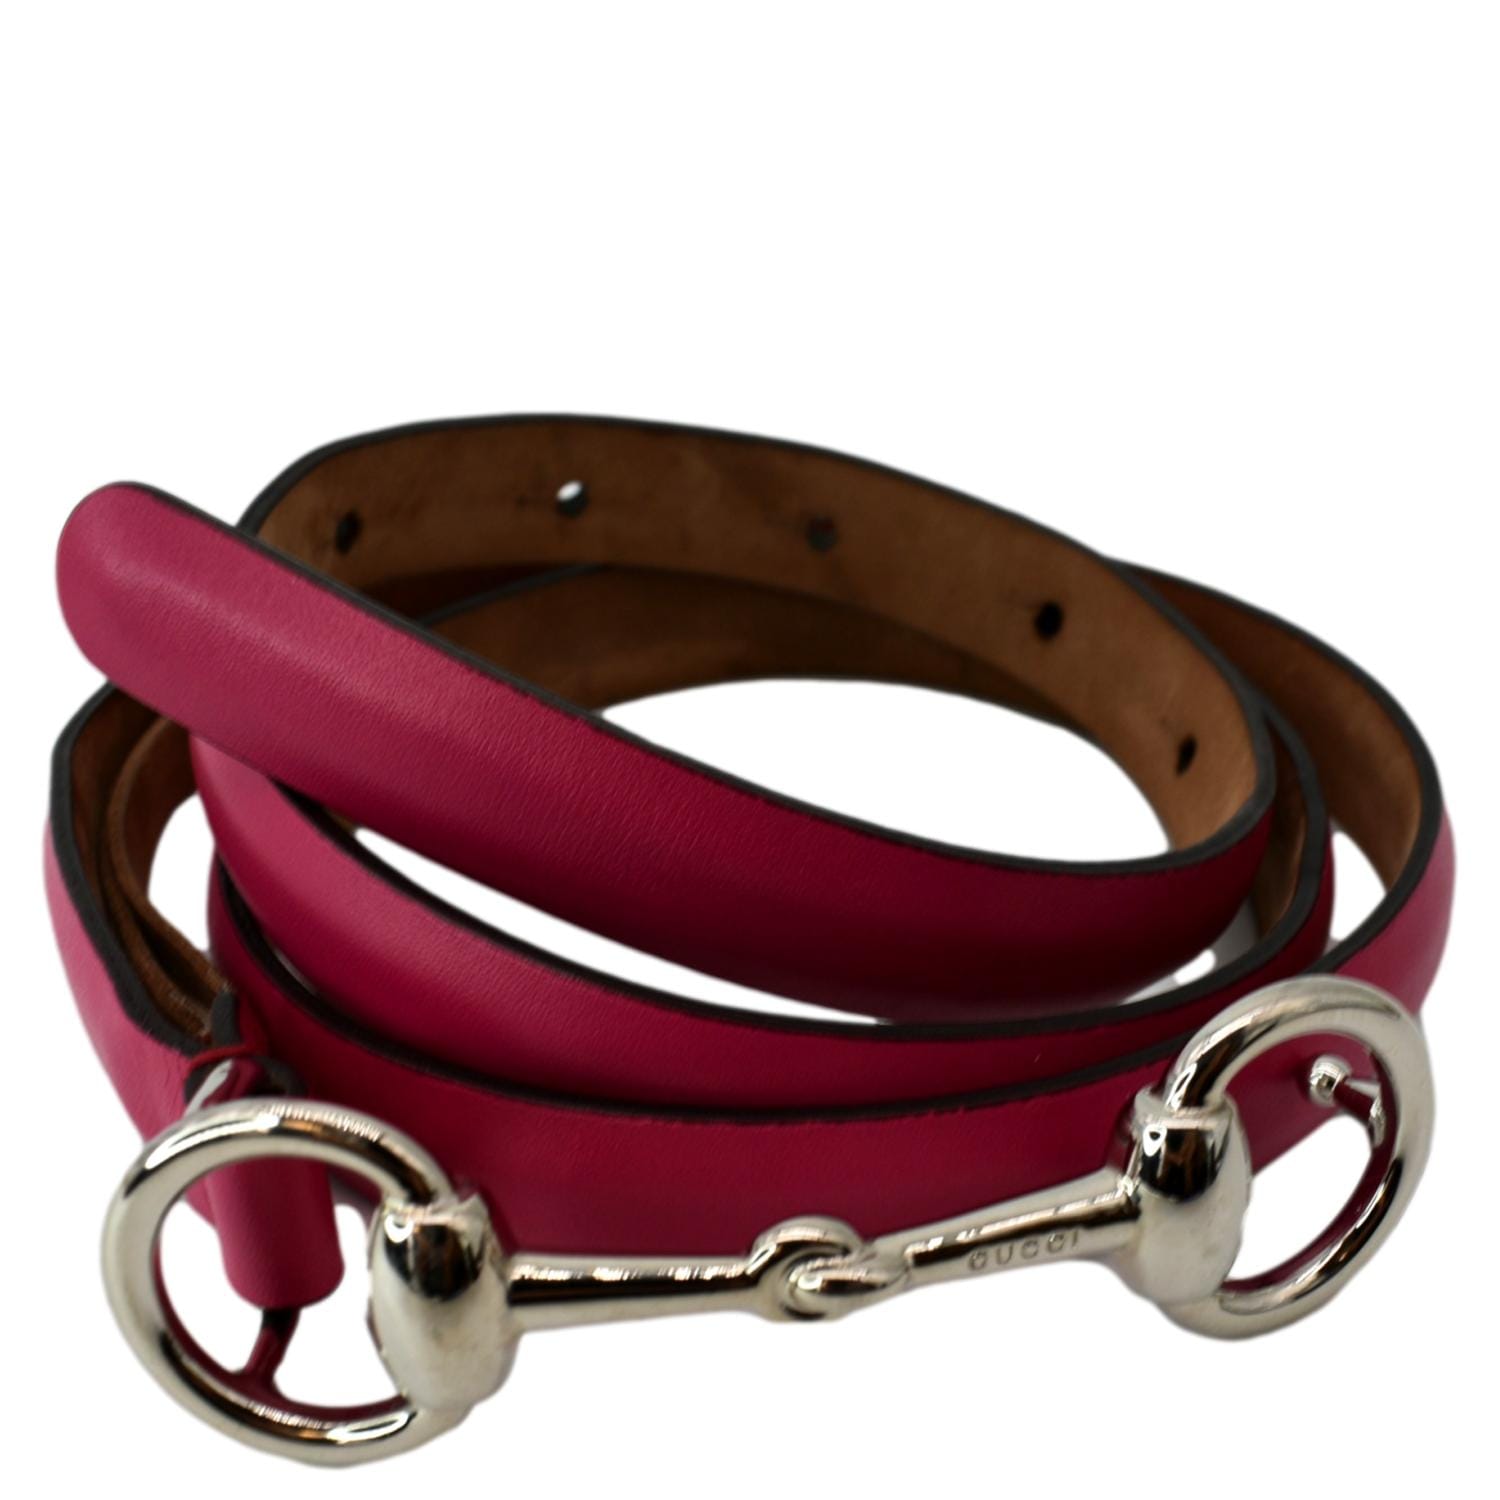 Gucci Leather Belt with Horse-bit Detail - Vintage Lux